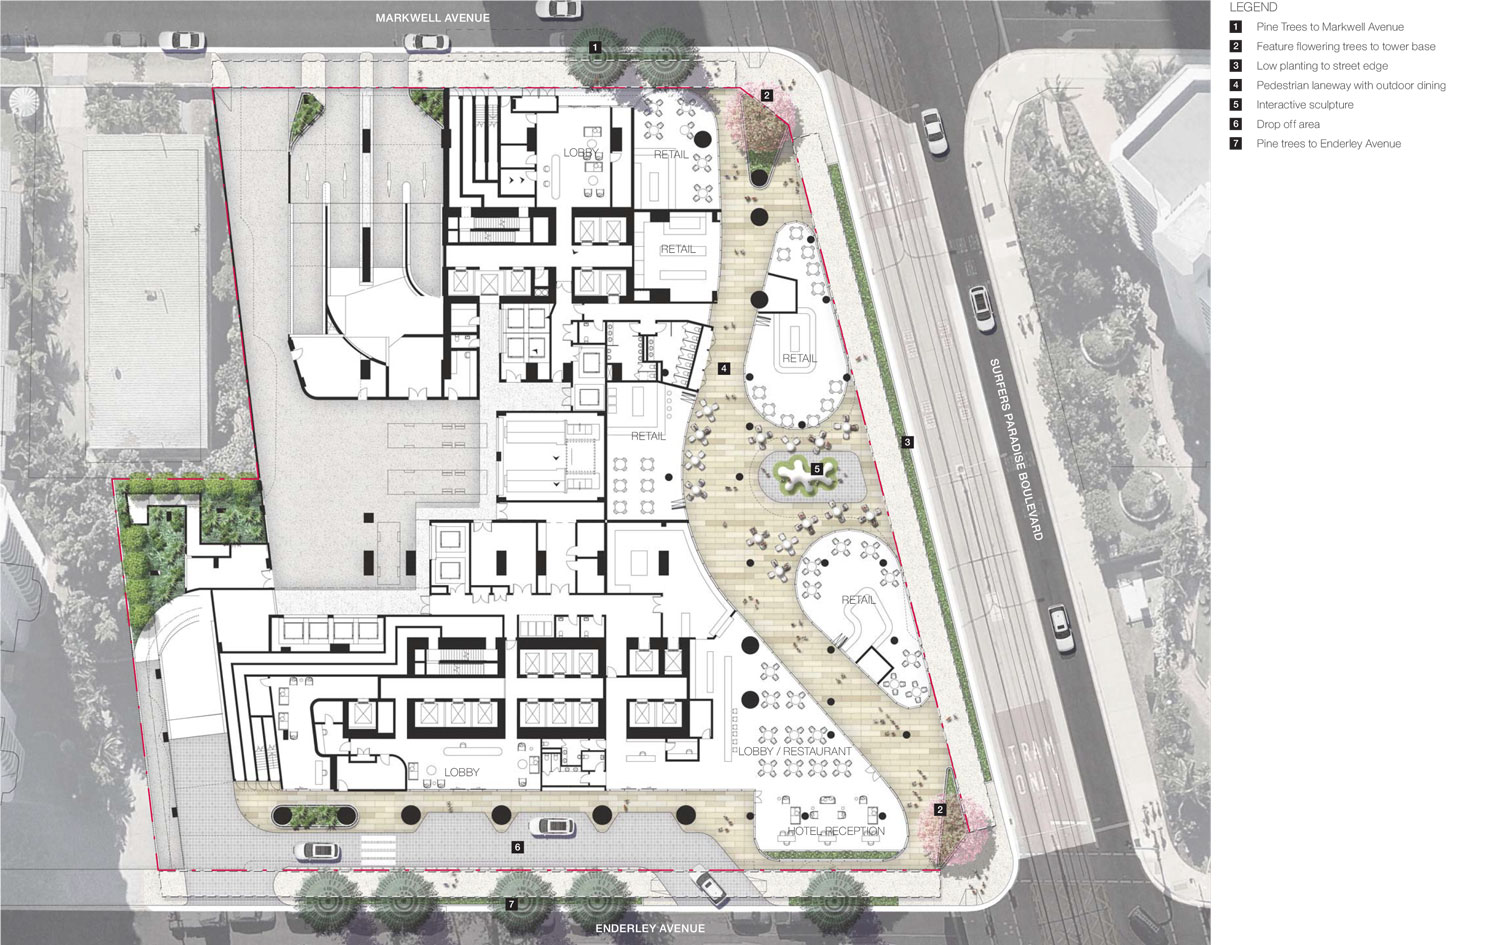 Proposed ground floor level plan